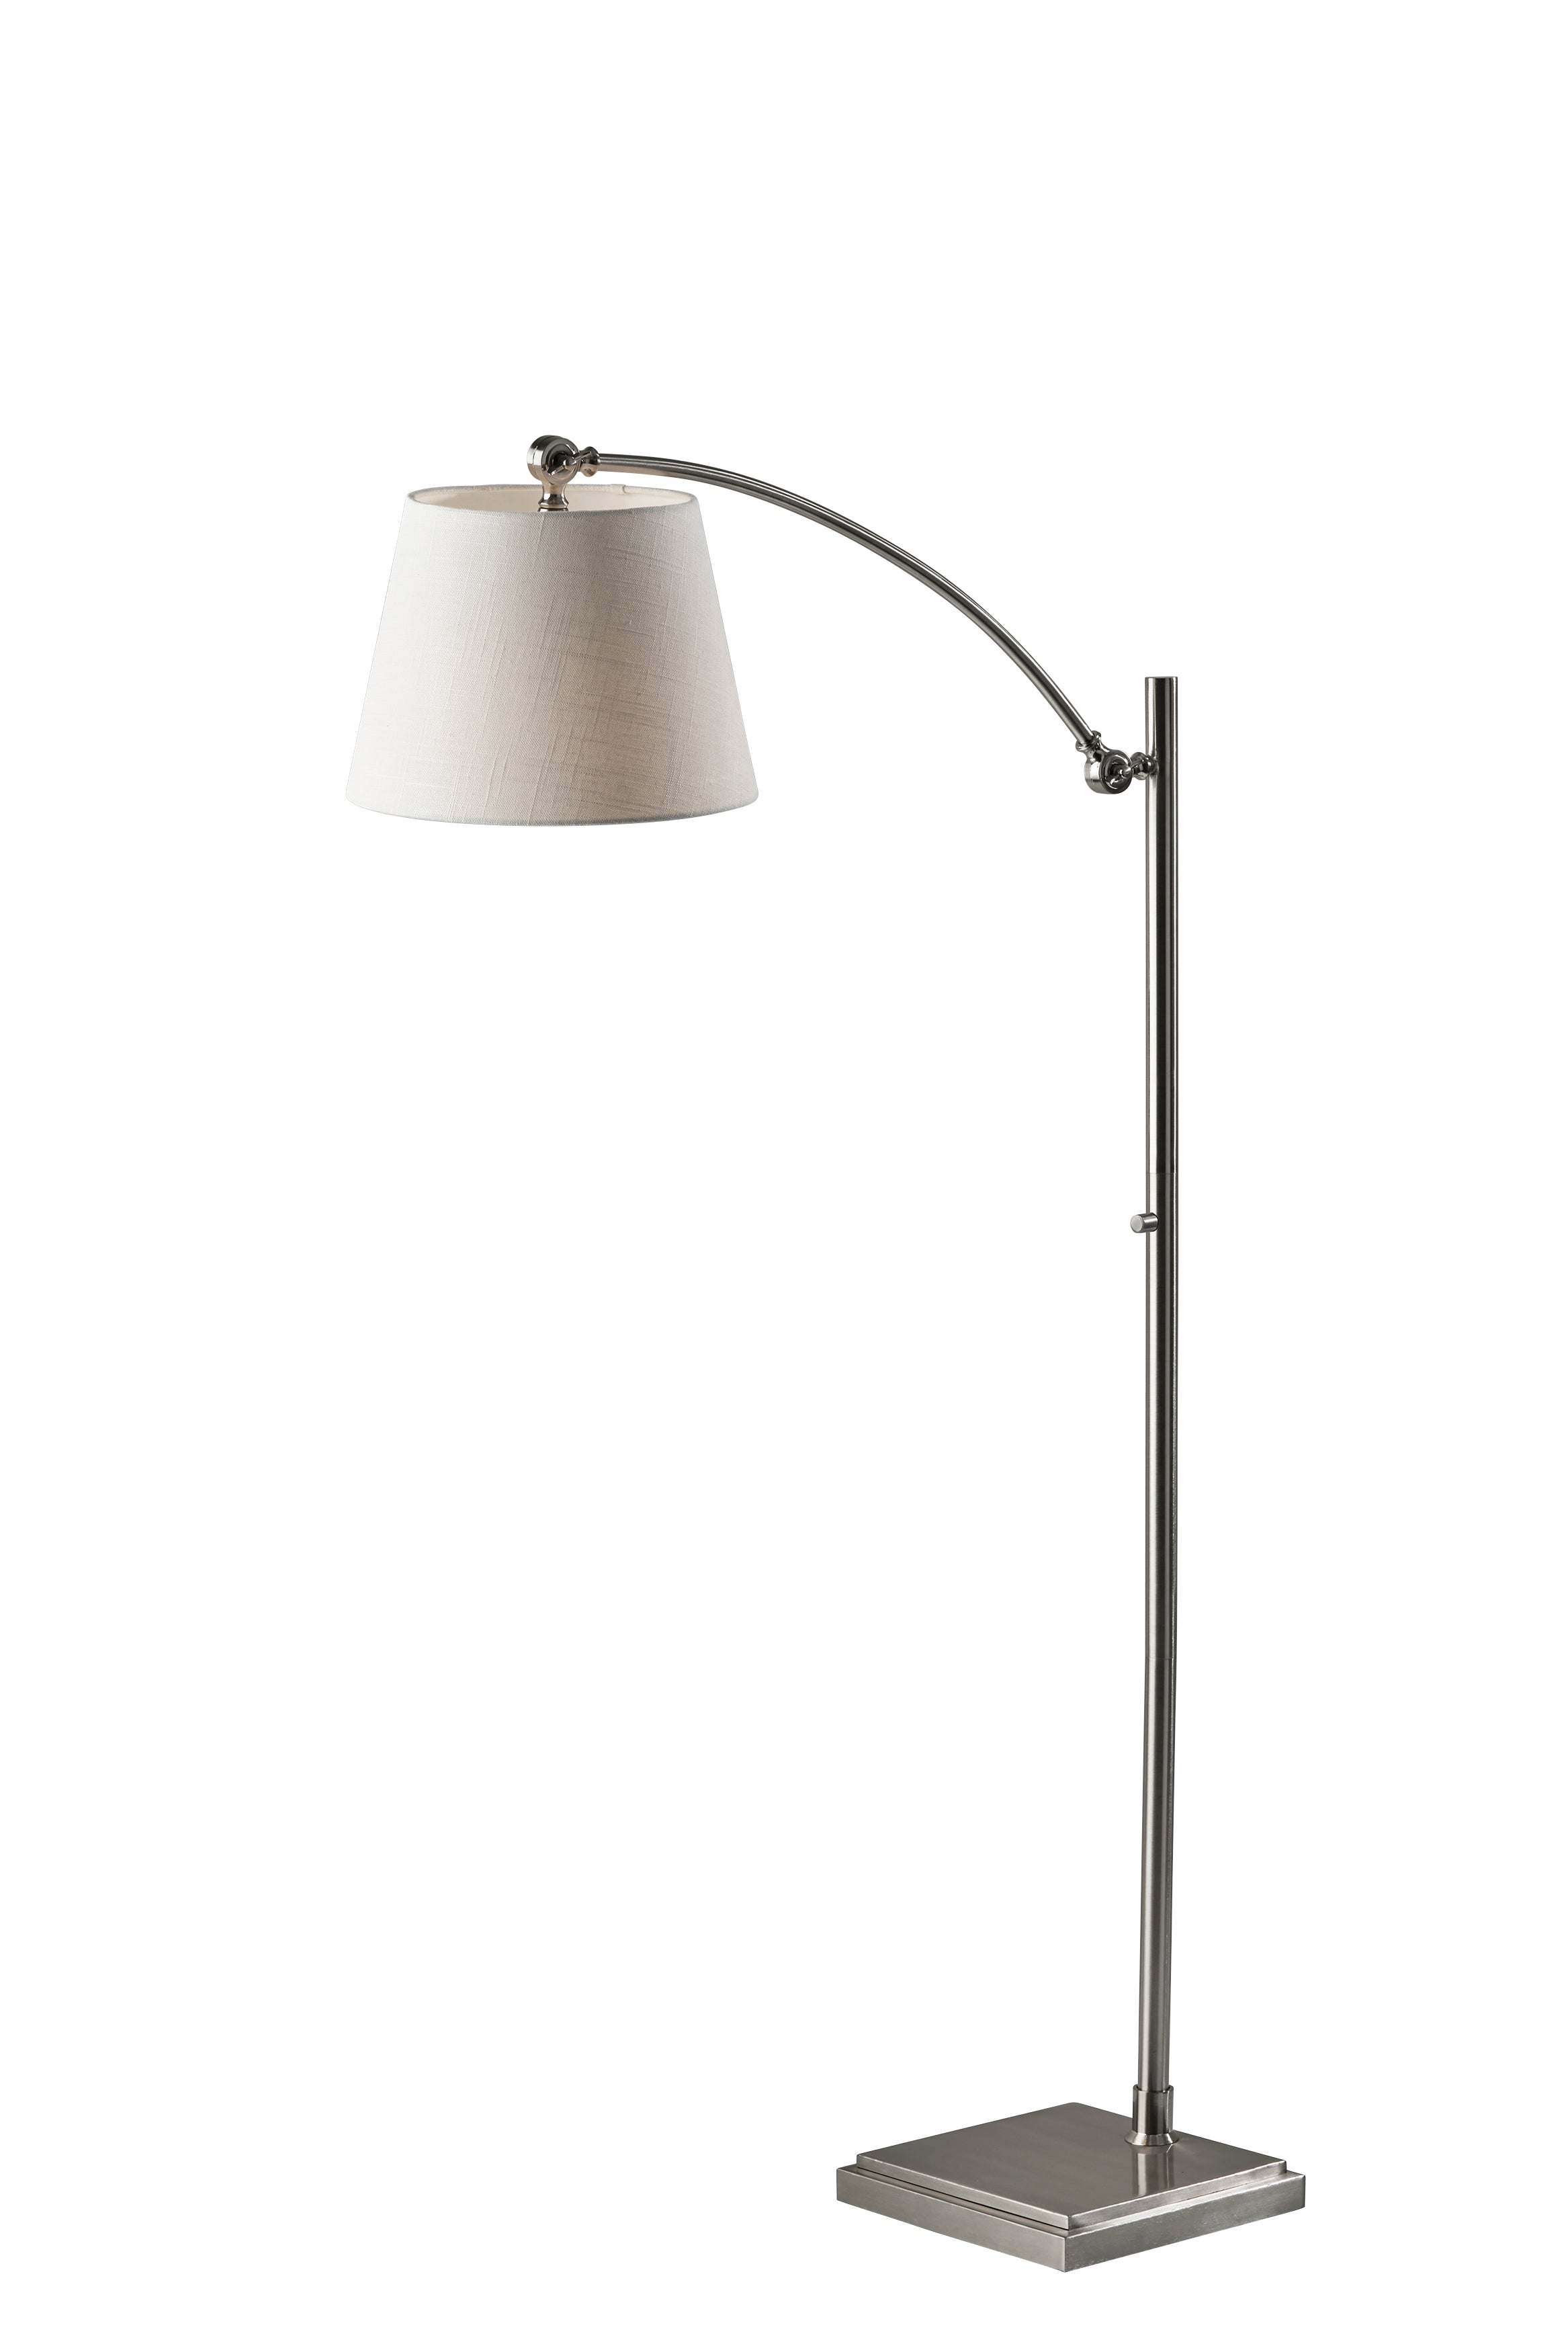 YORK Floor lamp Stainless steel - 1529-22 | ADESSO